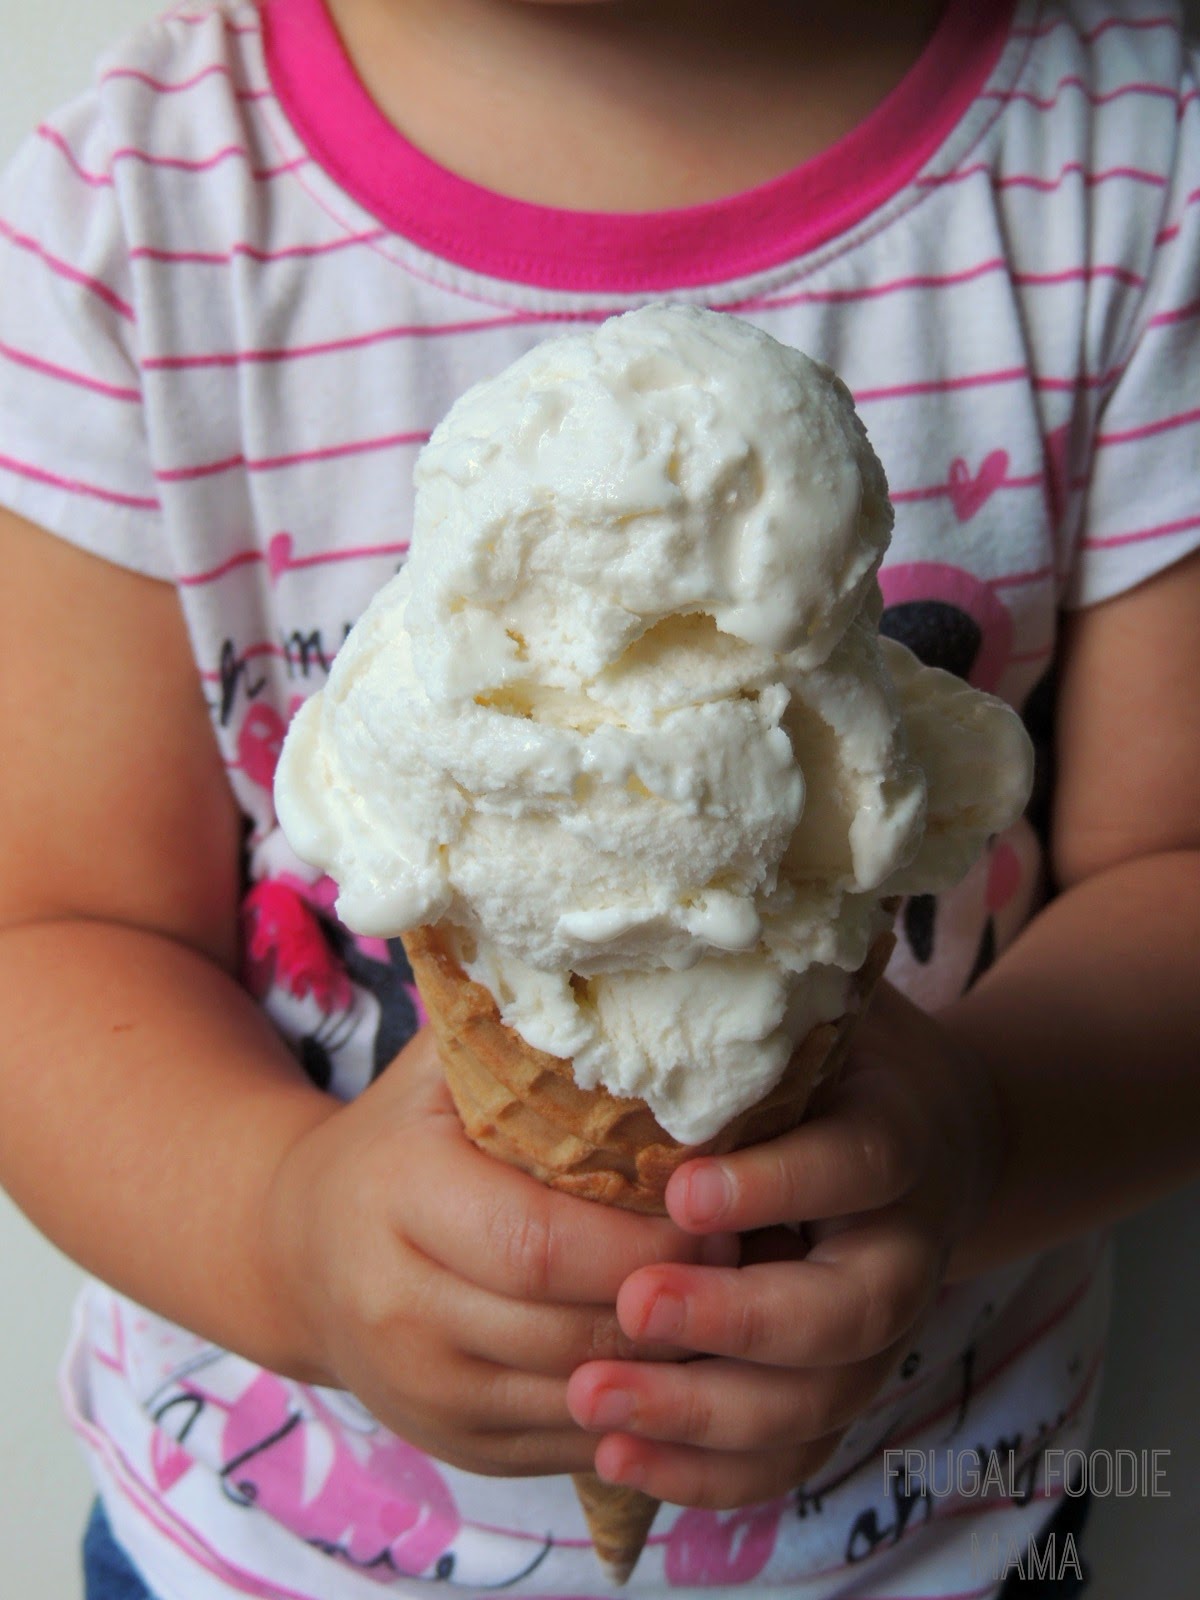 No ice cream maker is needed for this simple & creamy 4 Ingredient No Churn Vanilla Ice Cream.